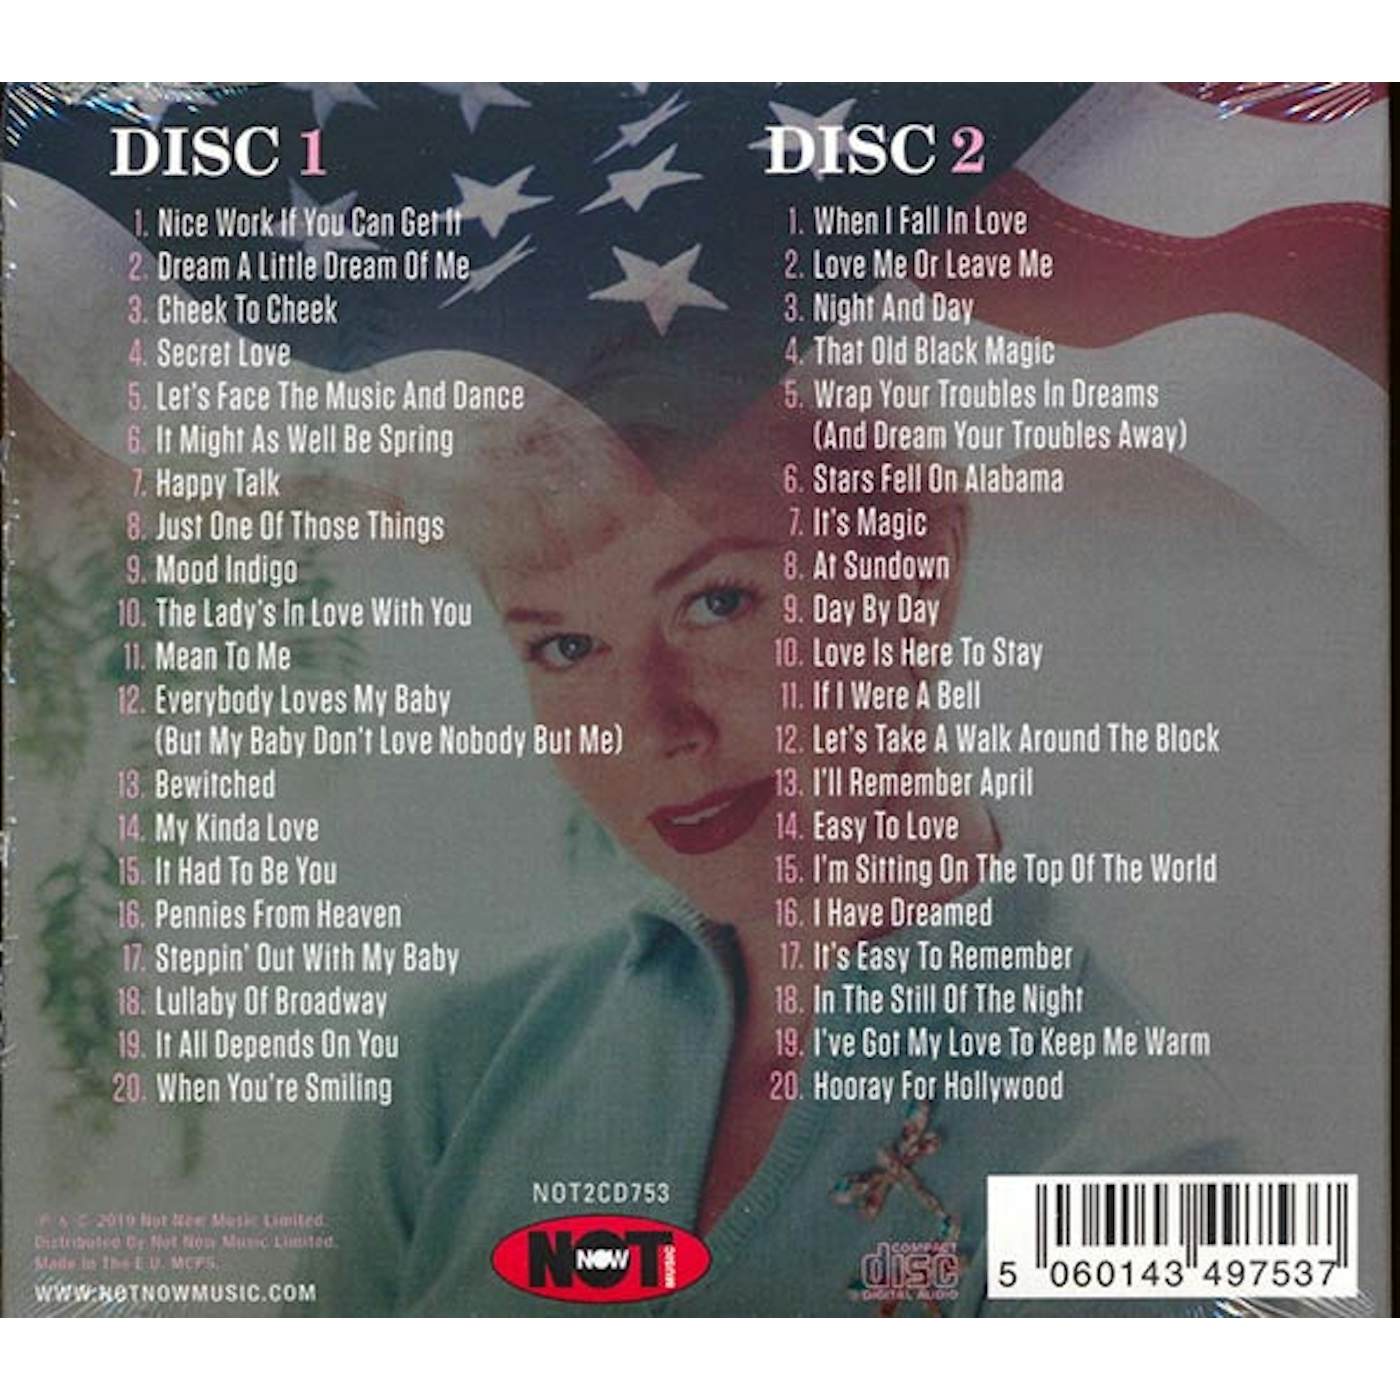 Doris Day  CD -  Sings The Great American Songbook (40 tracks) (2xCD) (deluxe 3 fold digipak)